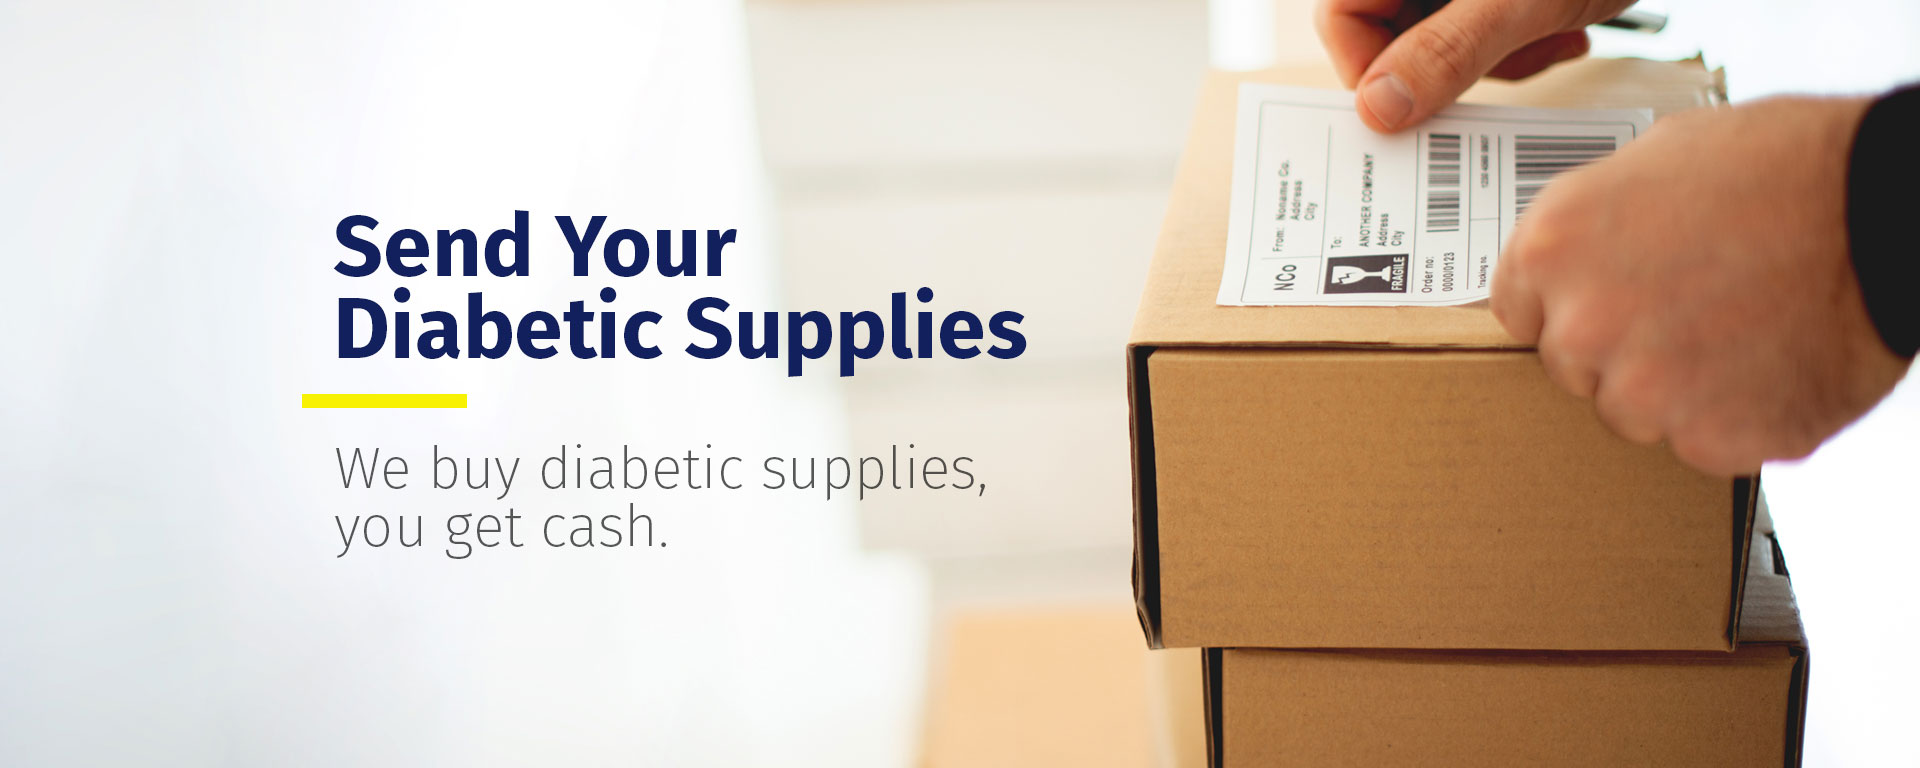 Send Your Diabetic Supplies